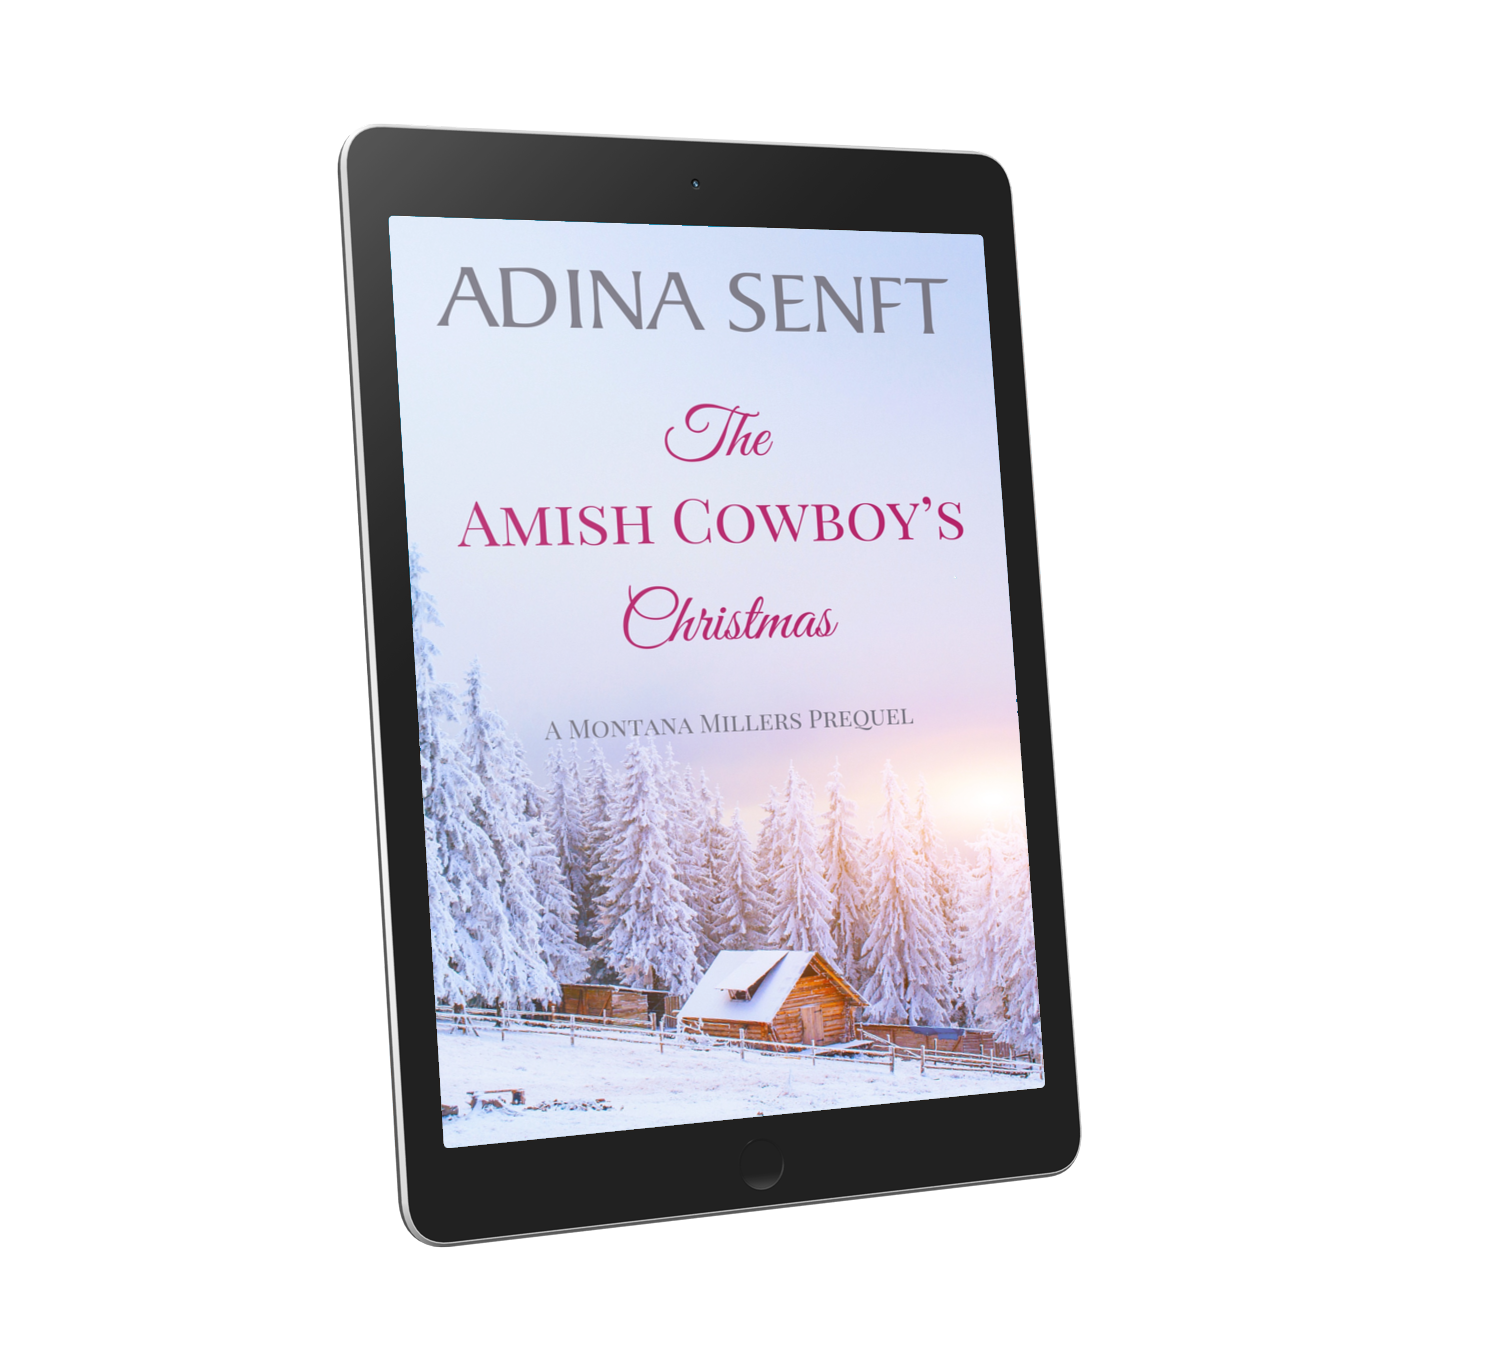 The Amish Cowboy's Christmas, an Amish girl next door prequel novella by Adina Senft